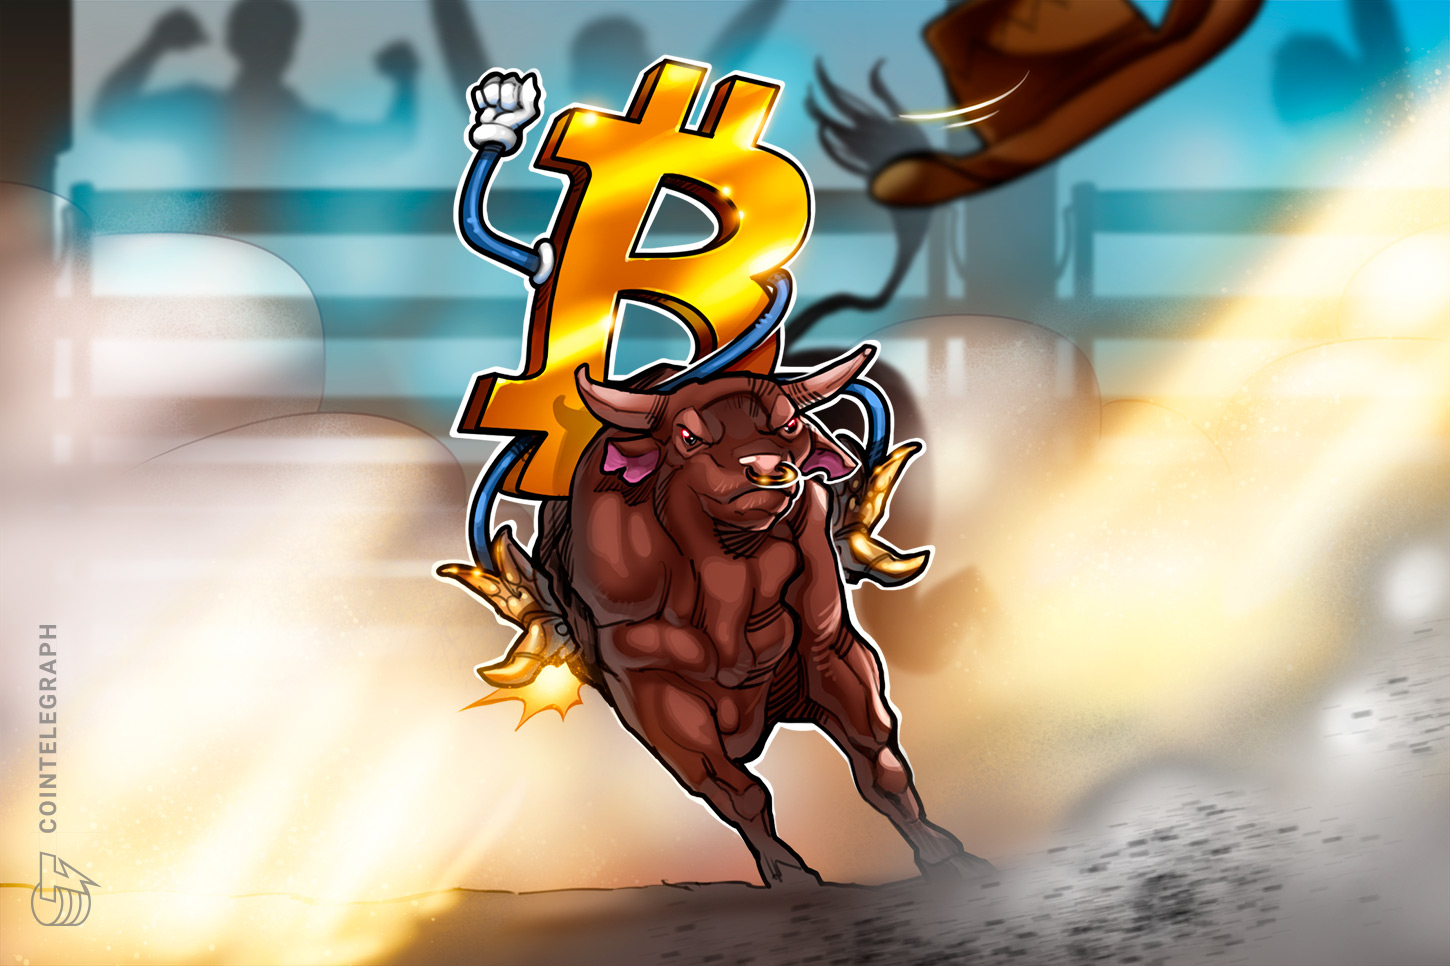 Bitcoin worth peak in December 2021 as ‘important bull run’ begins — Willy Woo